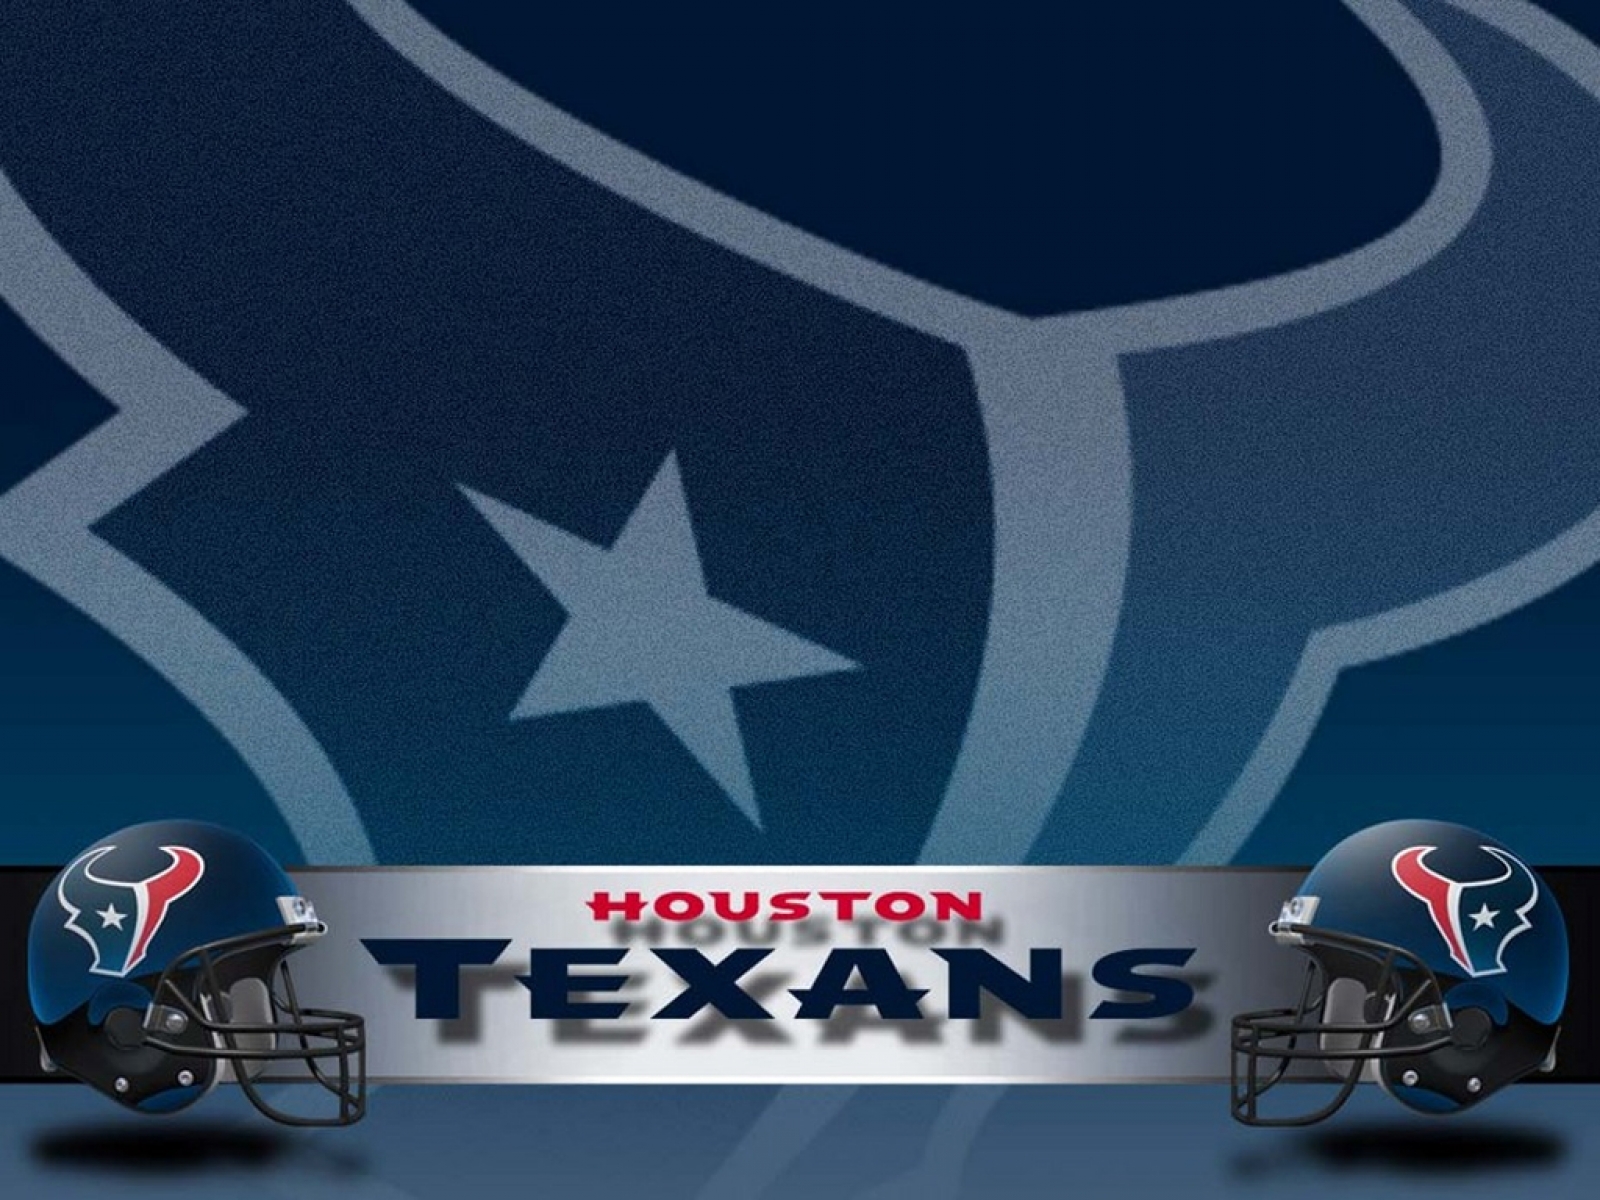 Houston Texans Wallpaper For Dektop